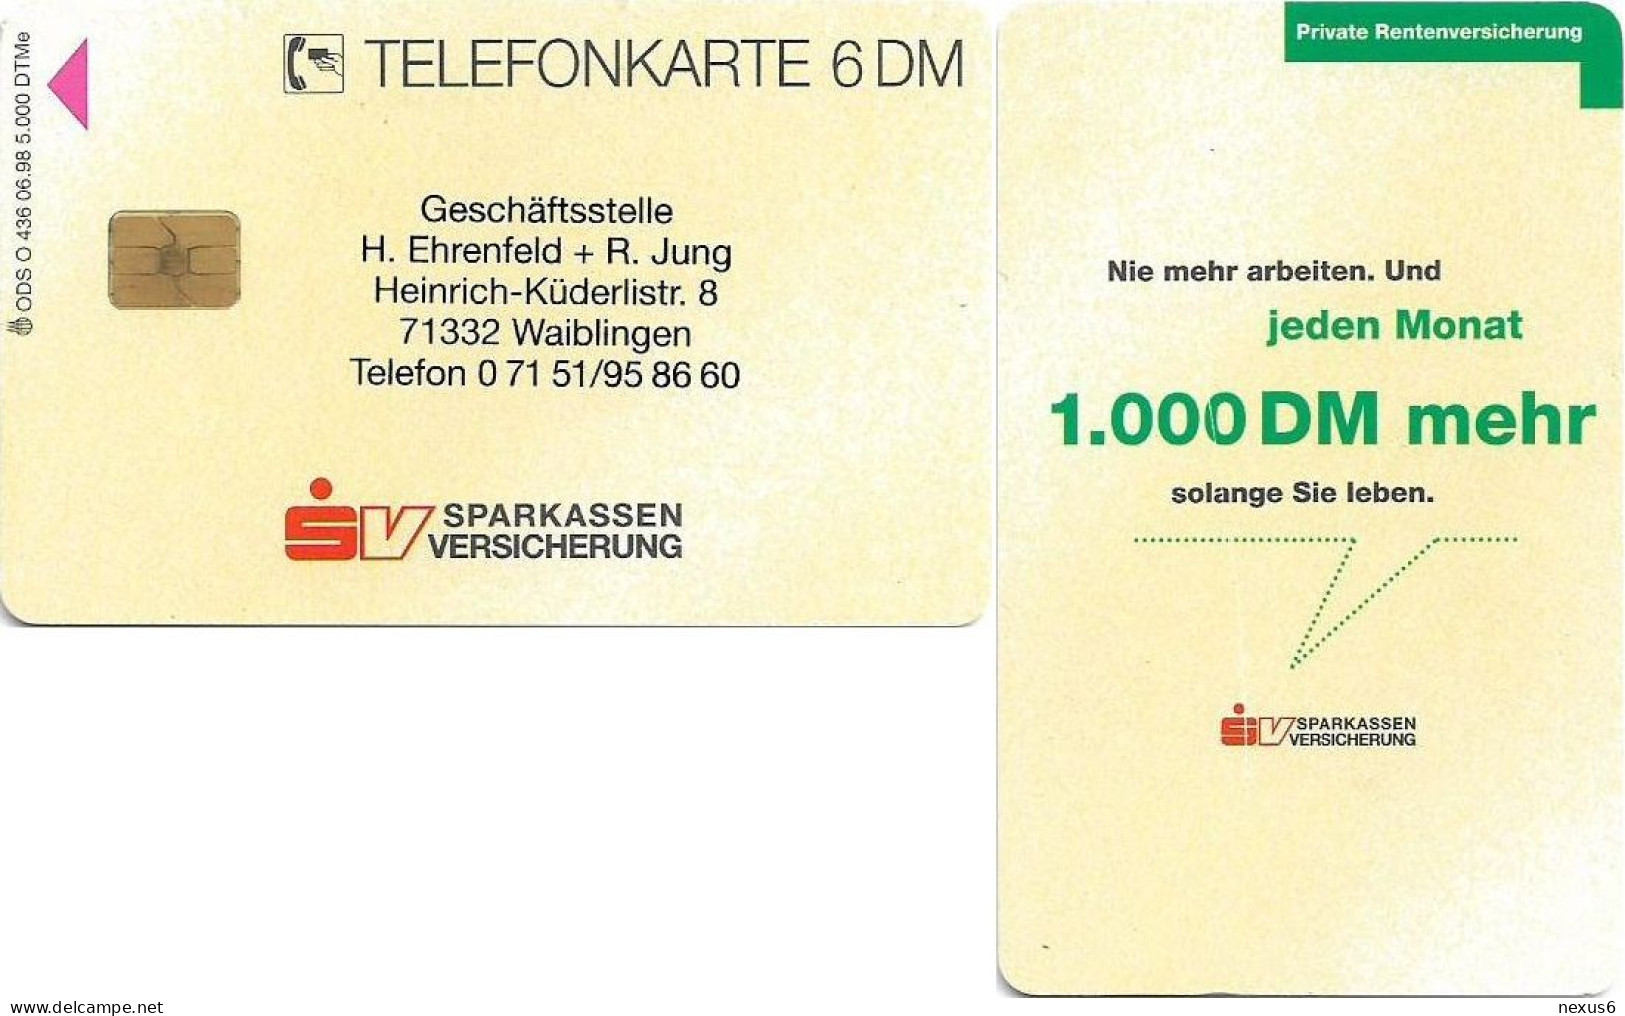 Germany - Sparkassen Versicherung 5 (Overprint ''Ehrenfeld & Jung'') - O 0436 - 06.1998, 6DM, Used - O-Series : Series Clientes Excluidos Servicio De Colección